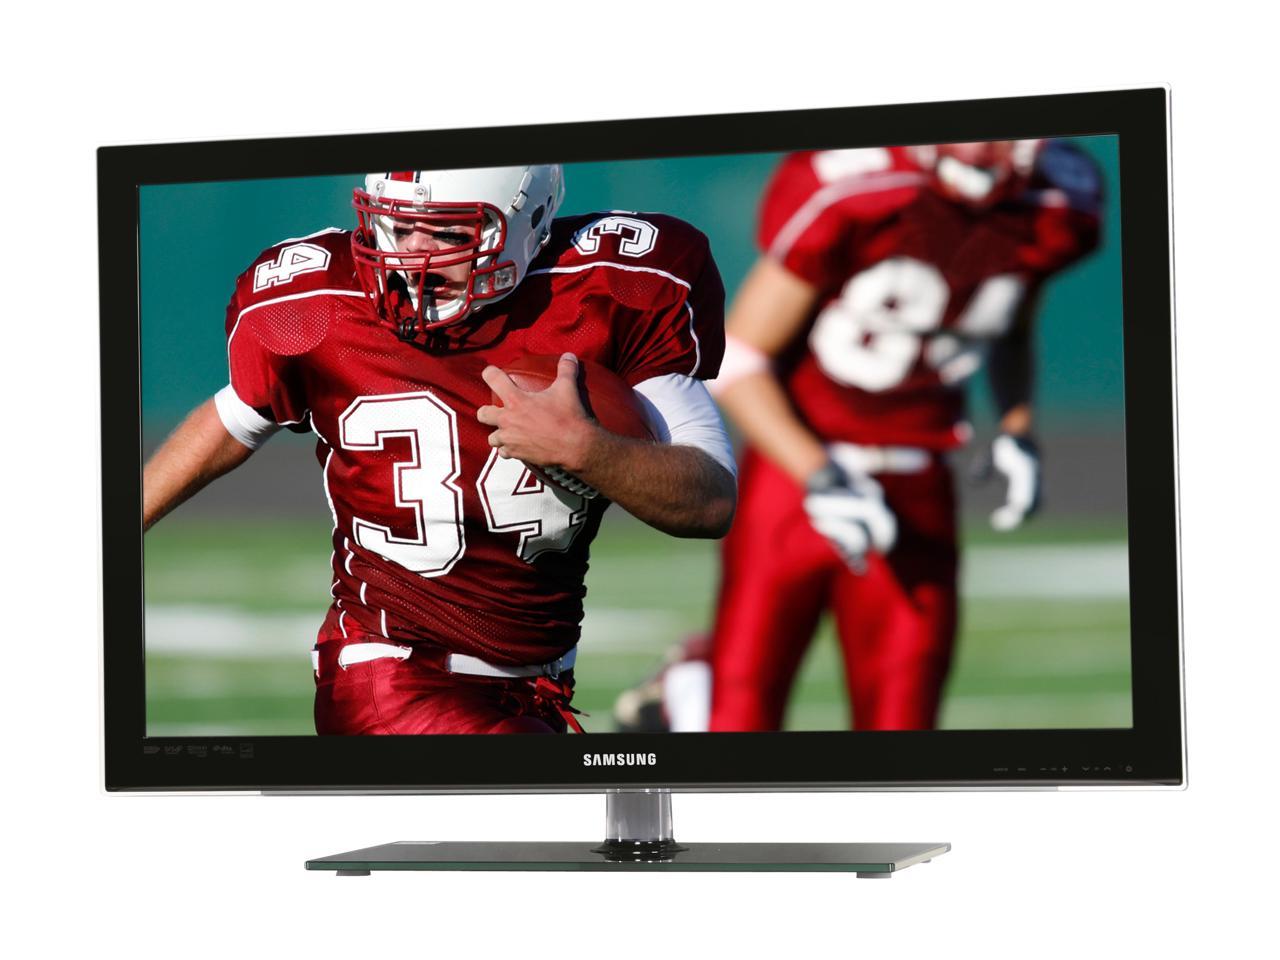 Samsung 40" 1080p 120Hz LCD HDTV - Newegg.com